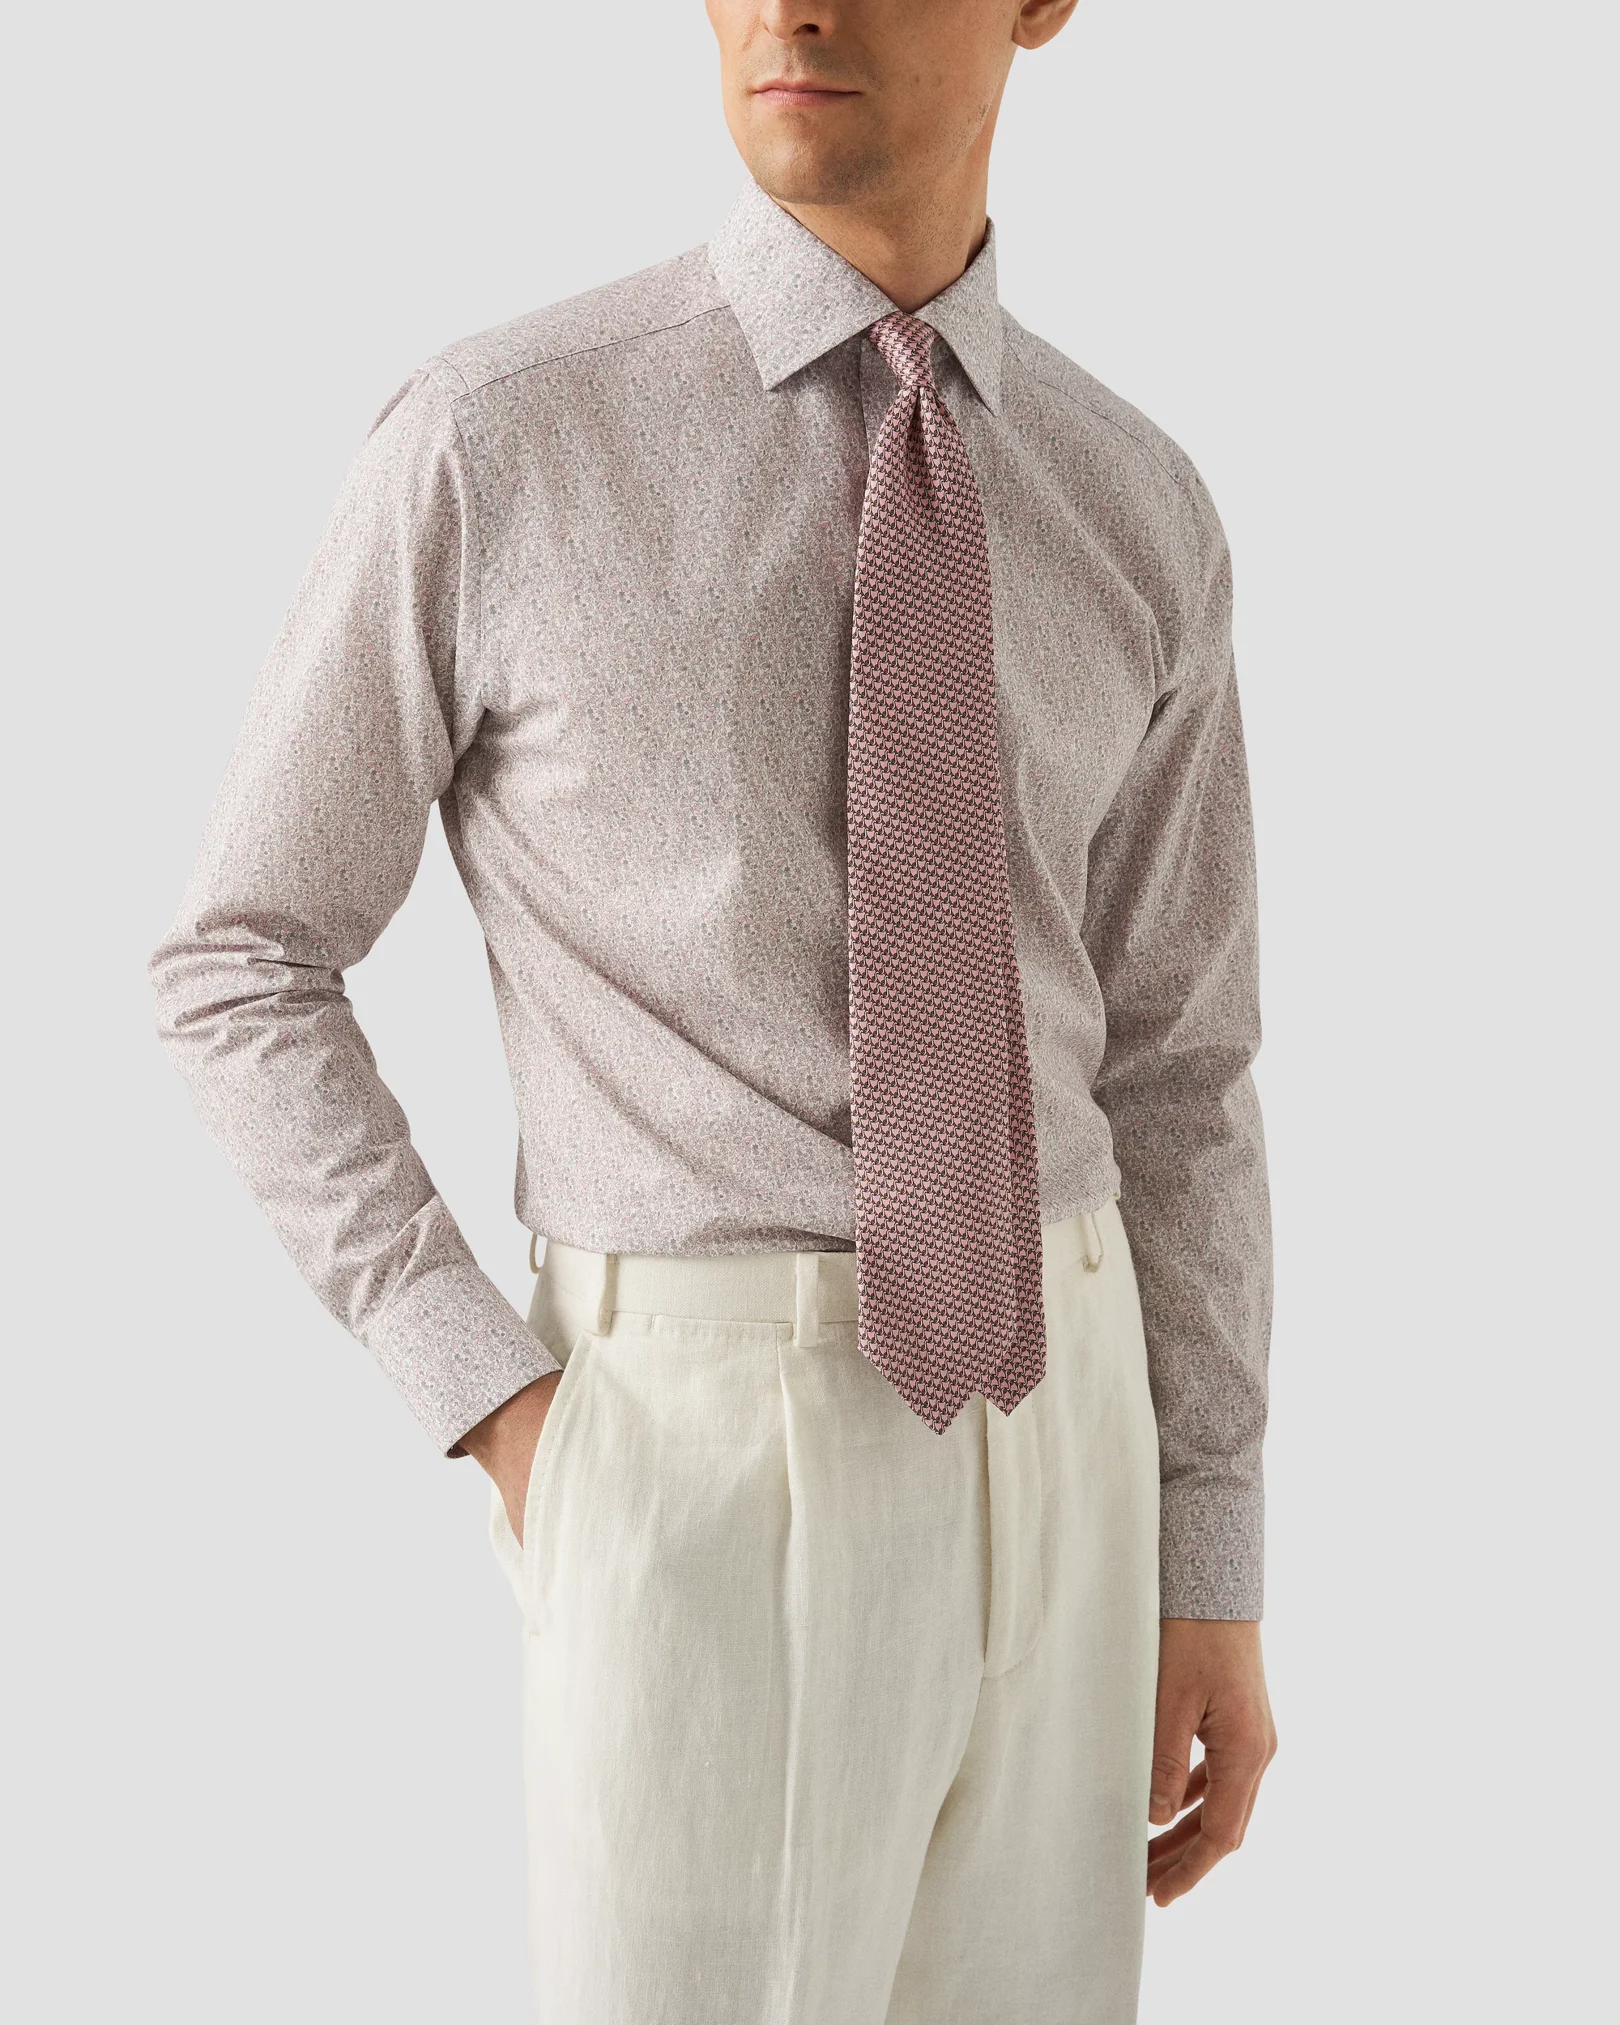 Eton - pink twill cutaway floral shirt